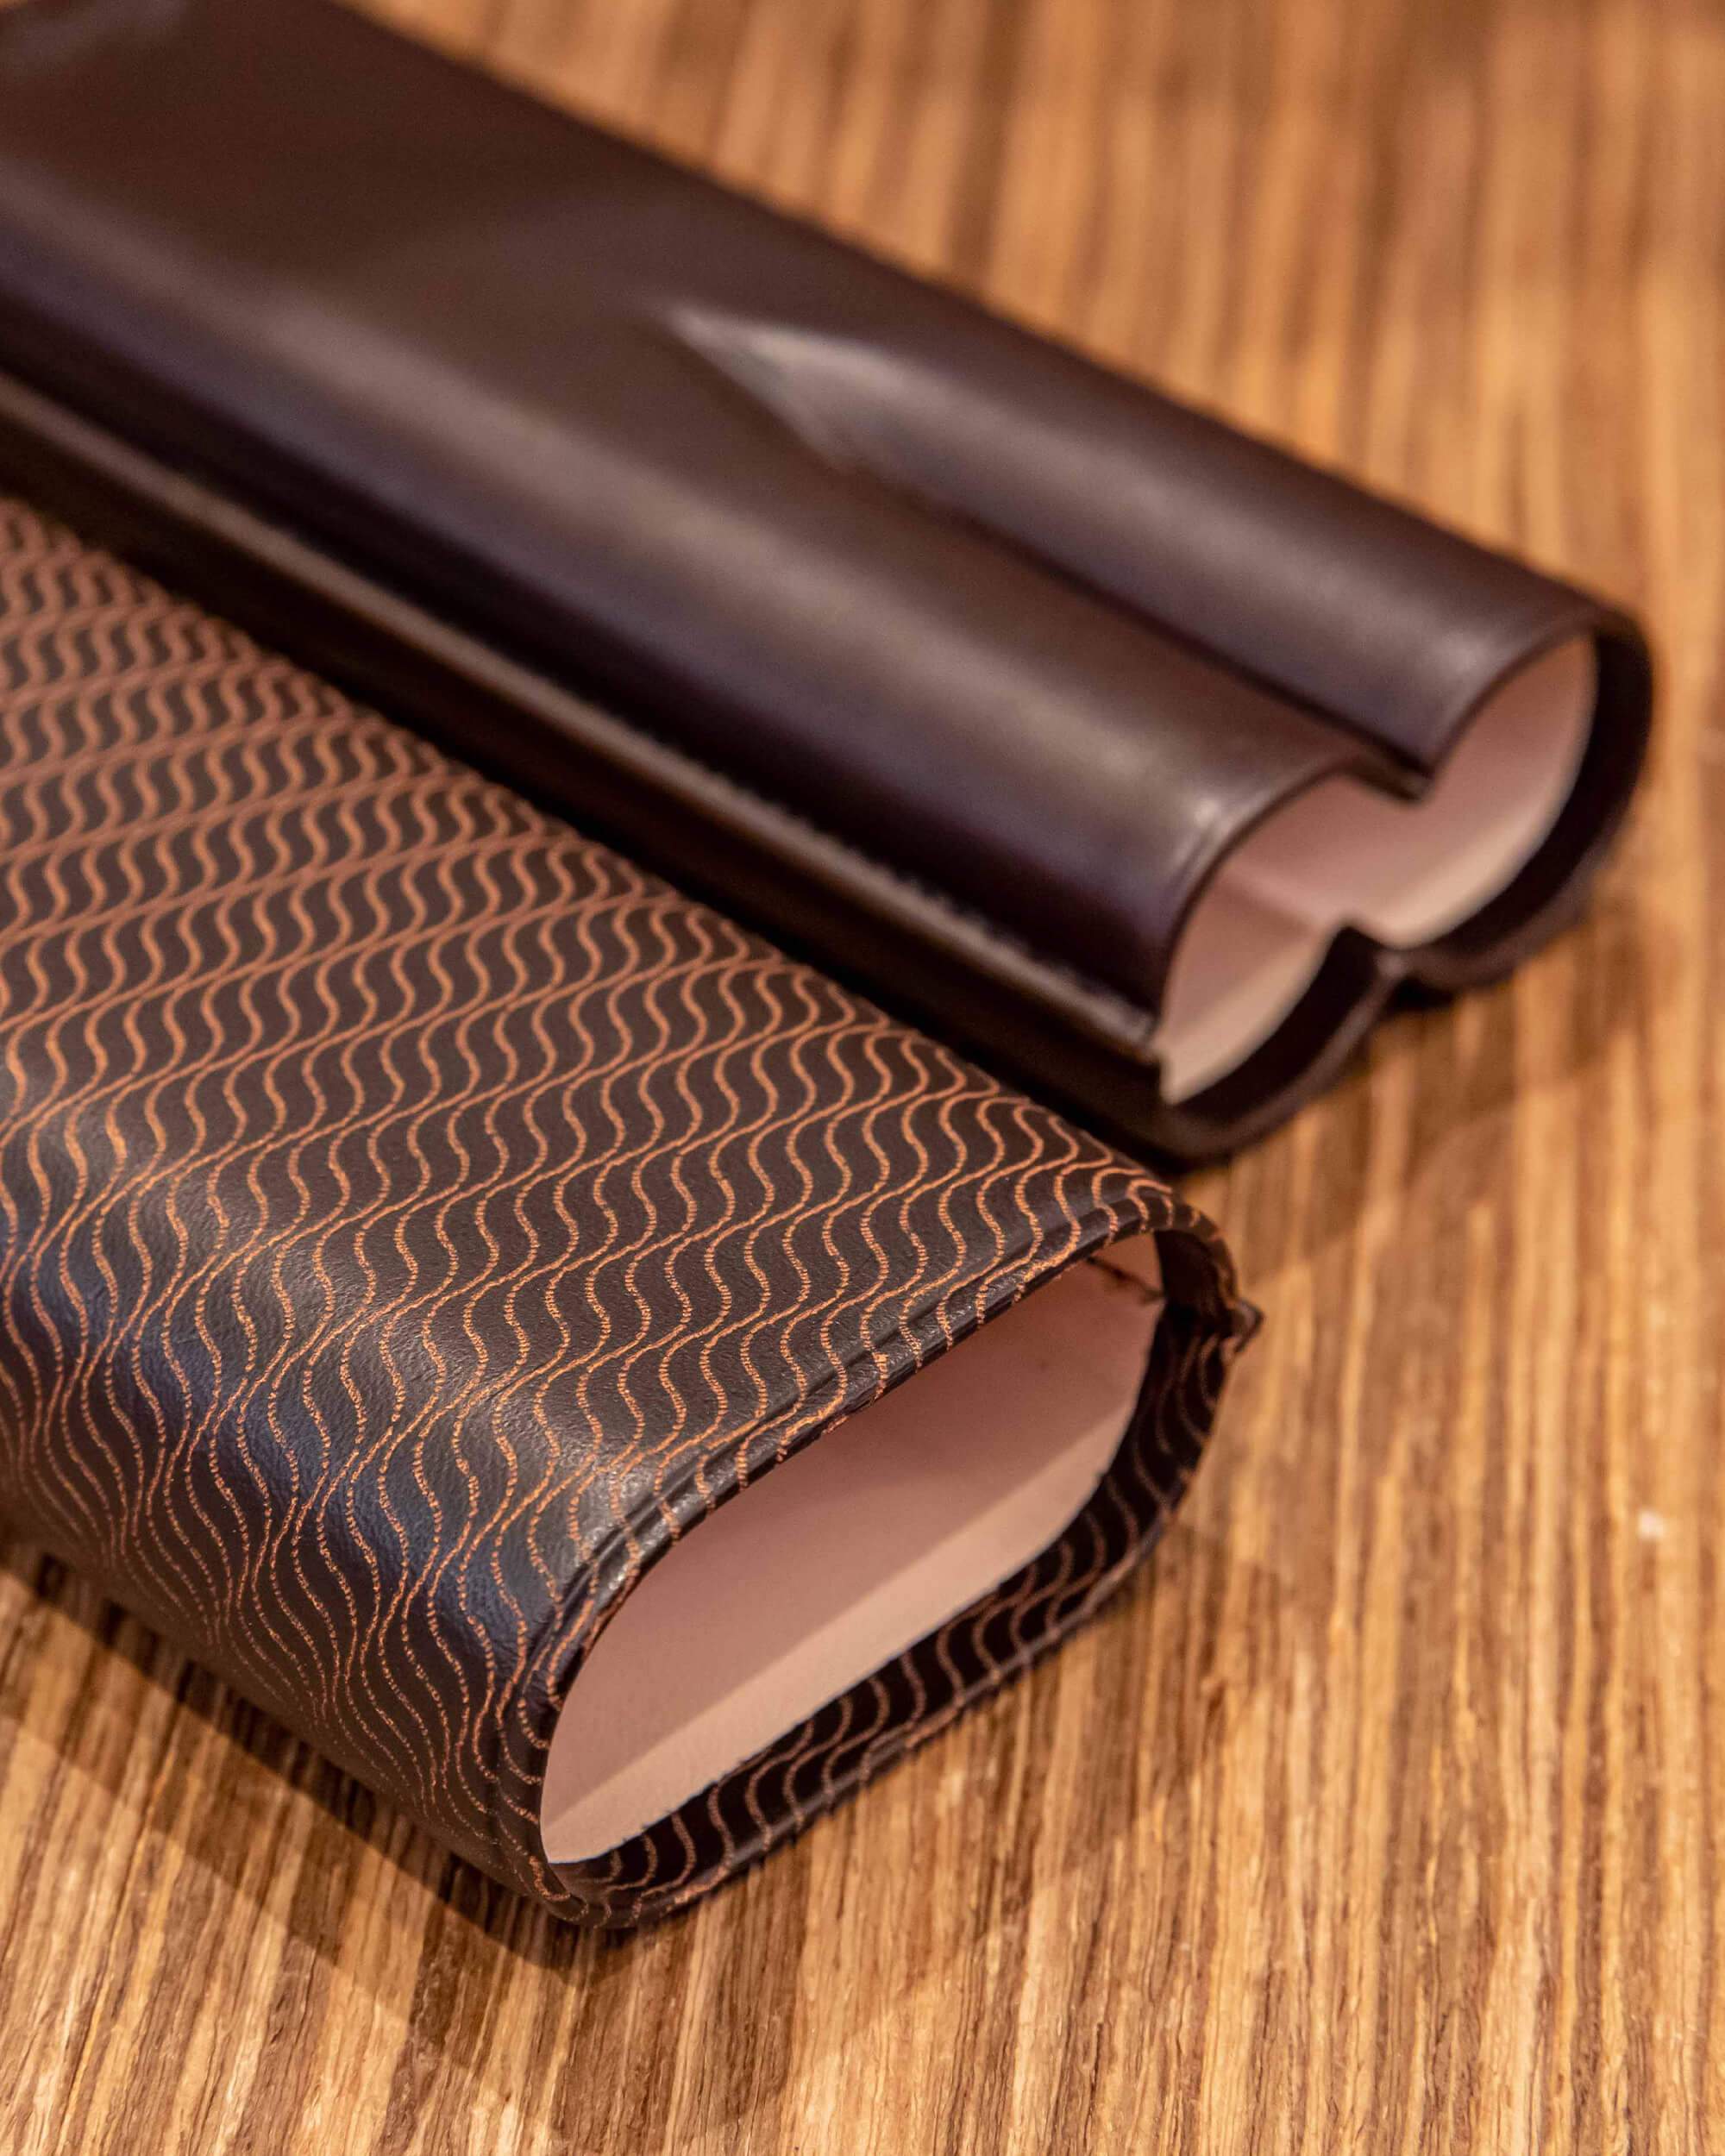 Davidoff Cigar Case XL-3 Leather Brown Curing